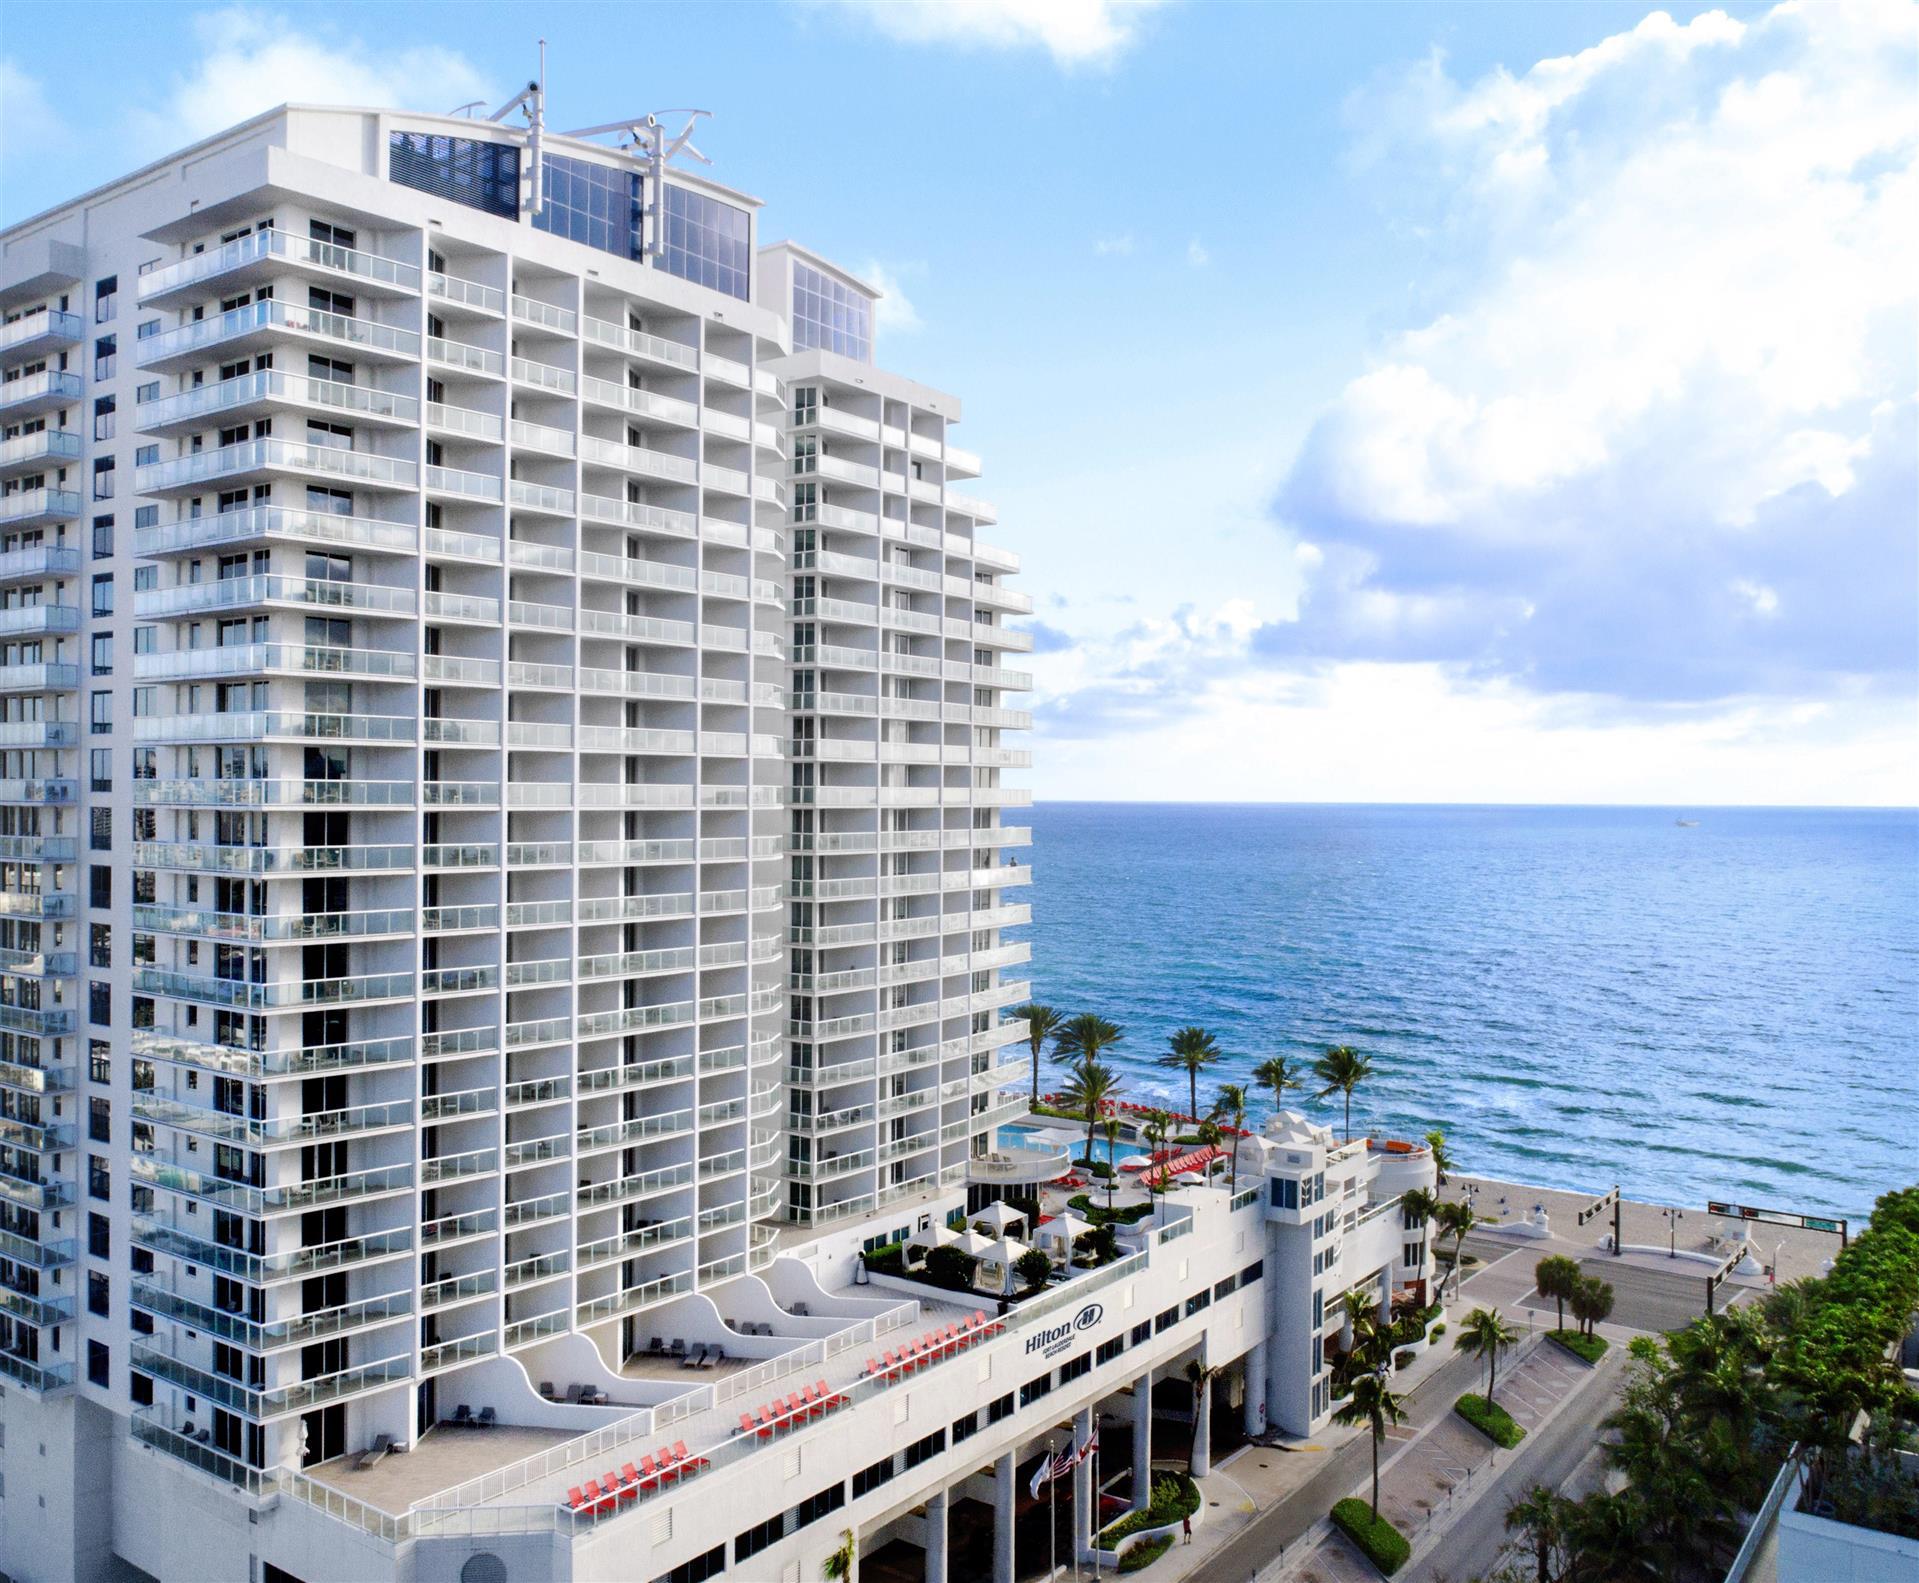 Hilton Fort Lauderdale Beach Resort in Fort Lauderdale, FL